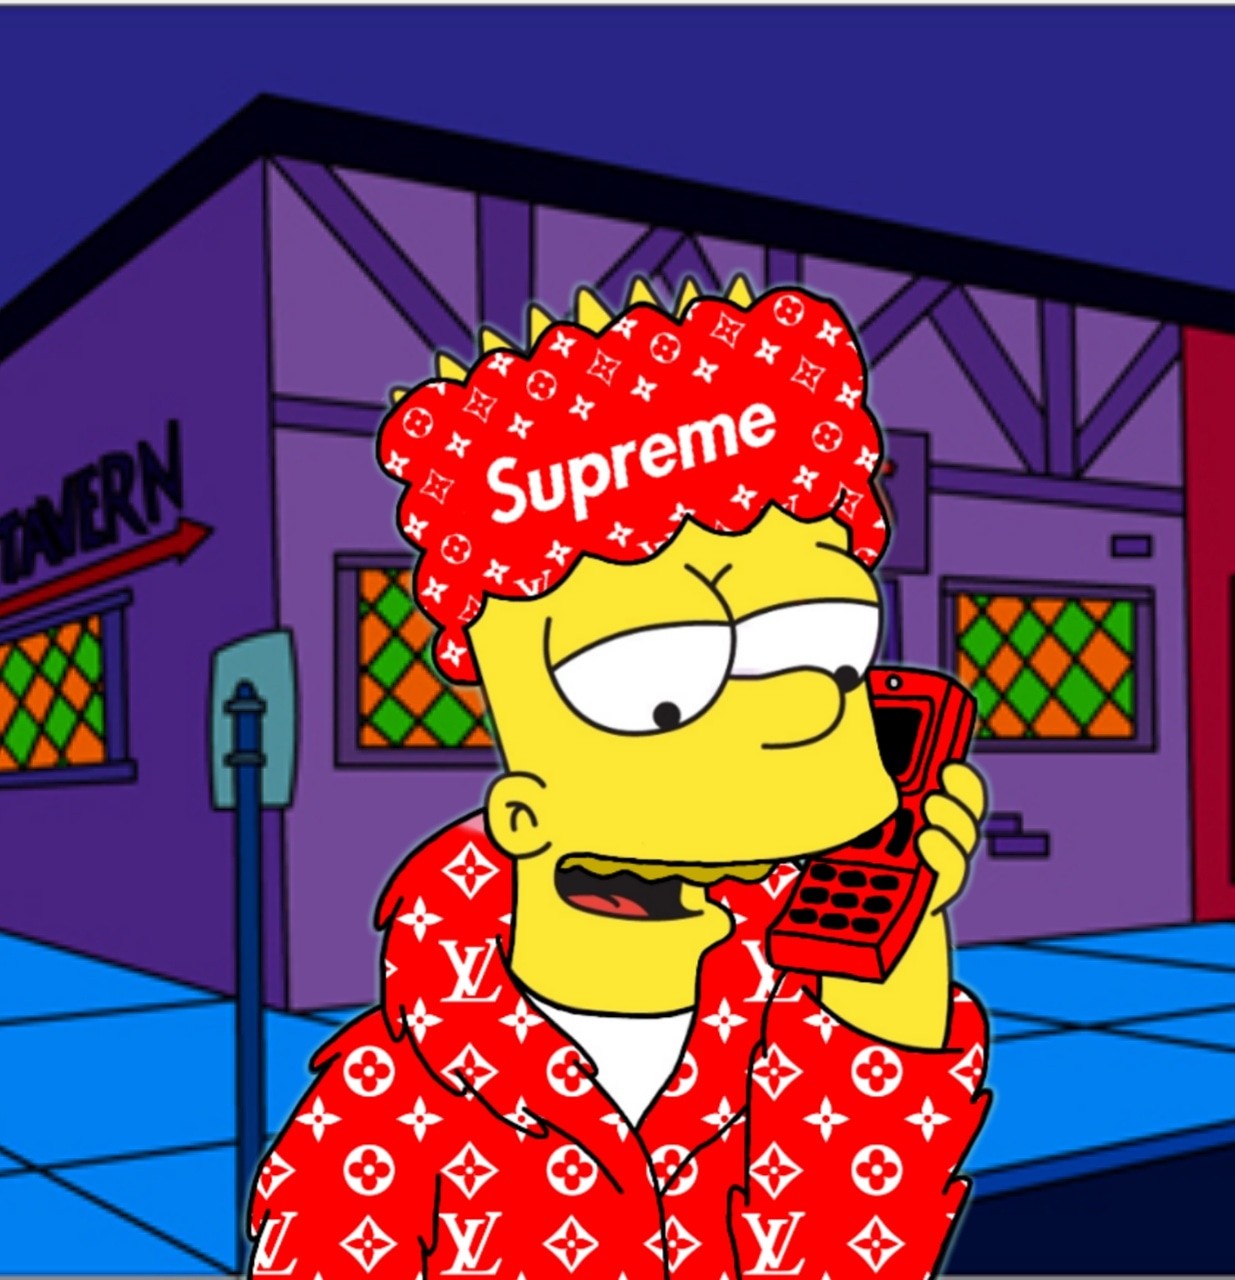 Simpson Supreme Wallpaper / Simpsons Supreme Wallpapers - Wallpaper ...